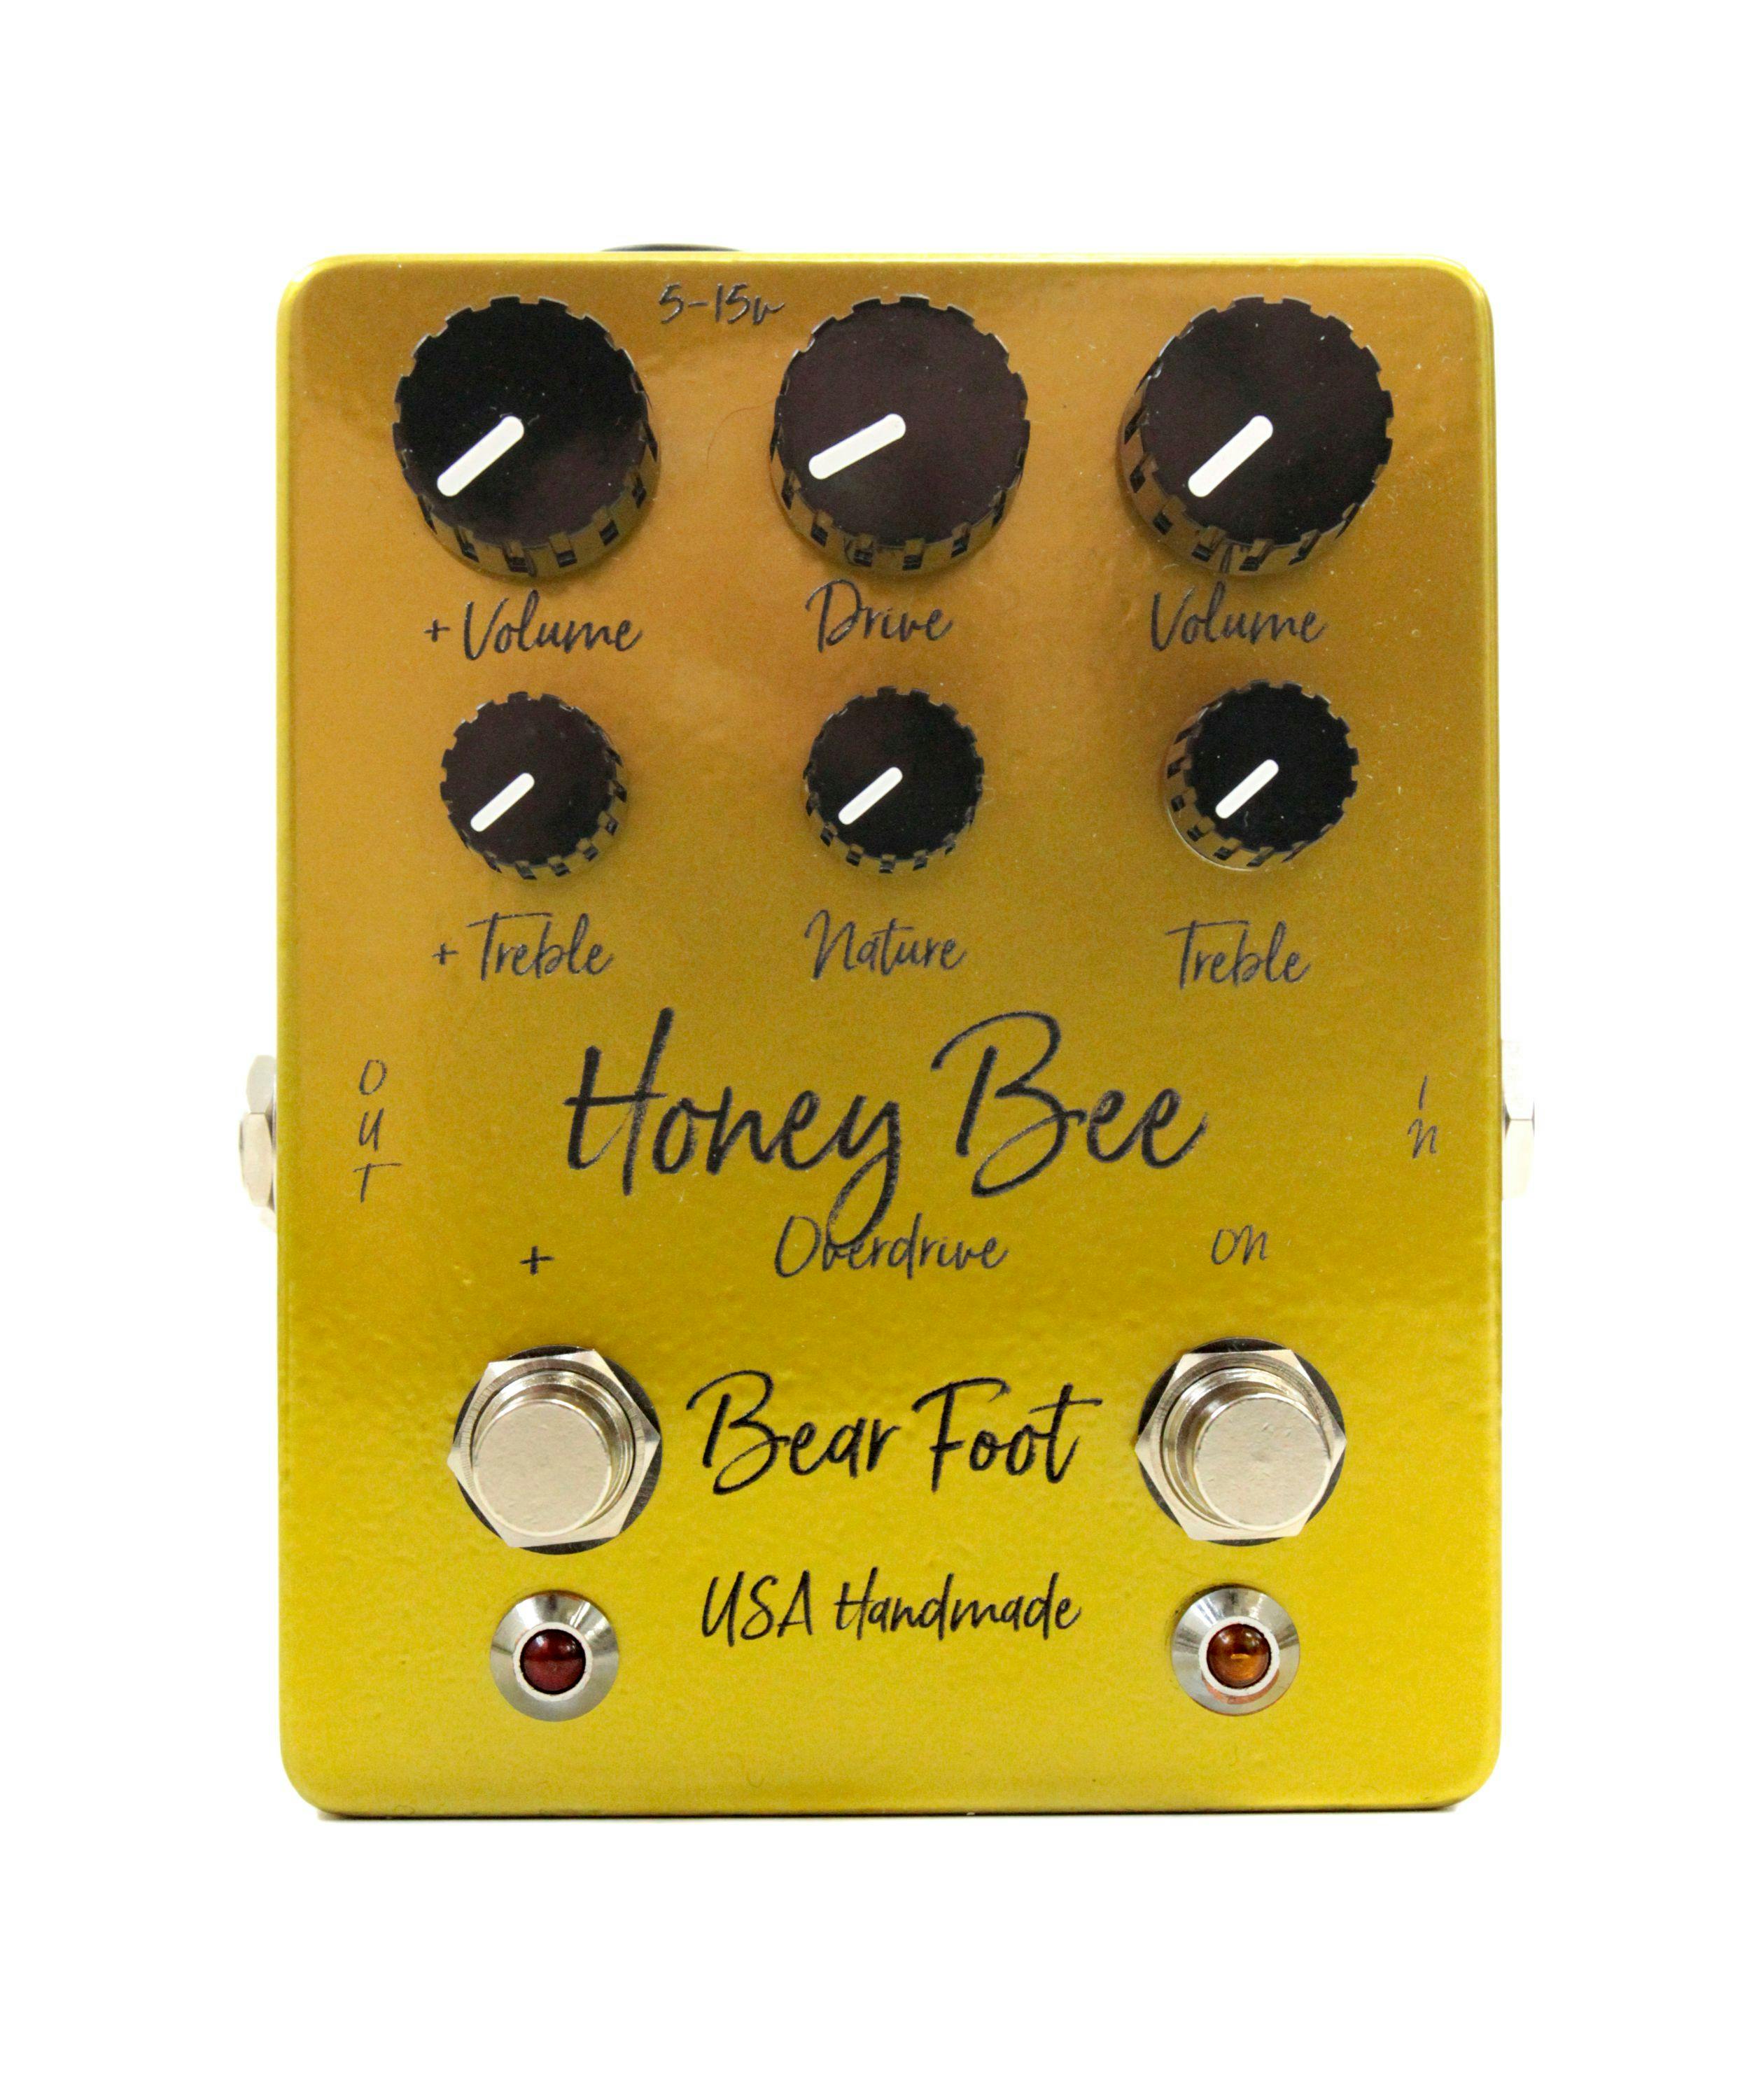 bearfoot honeybee overdrive